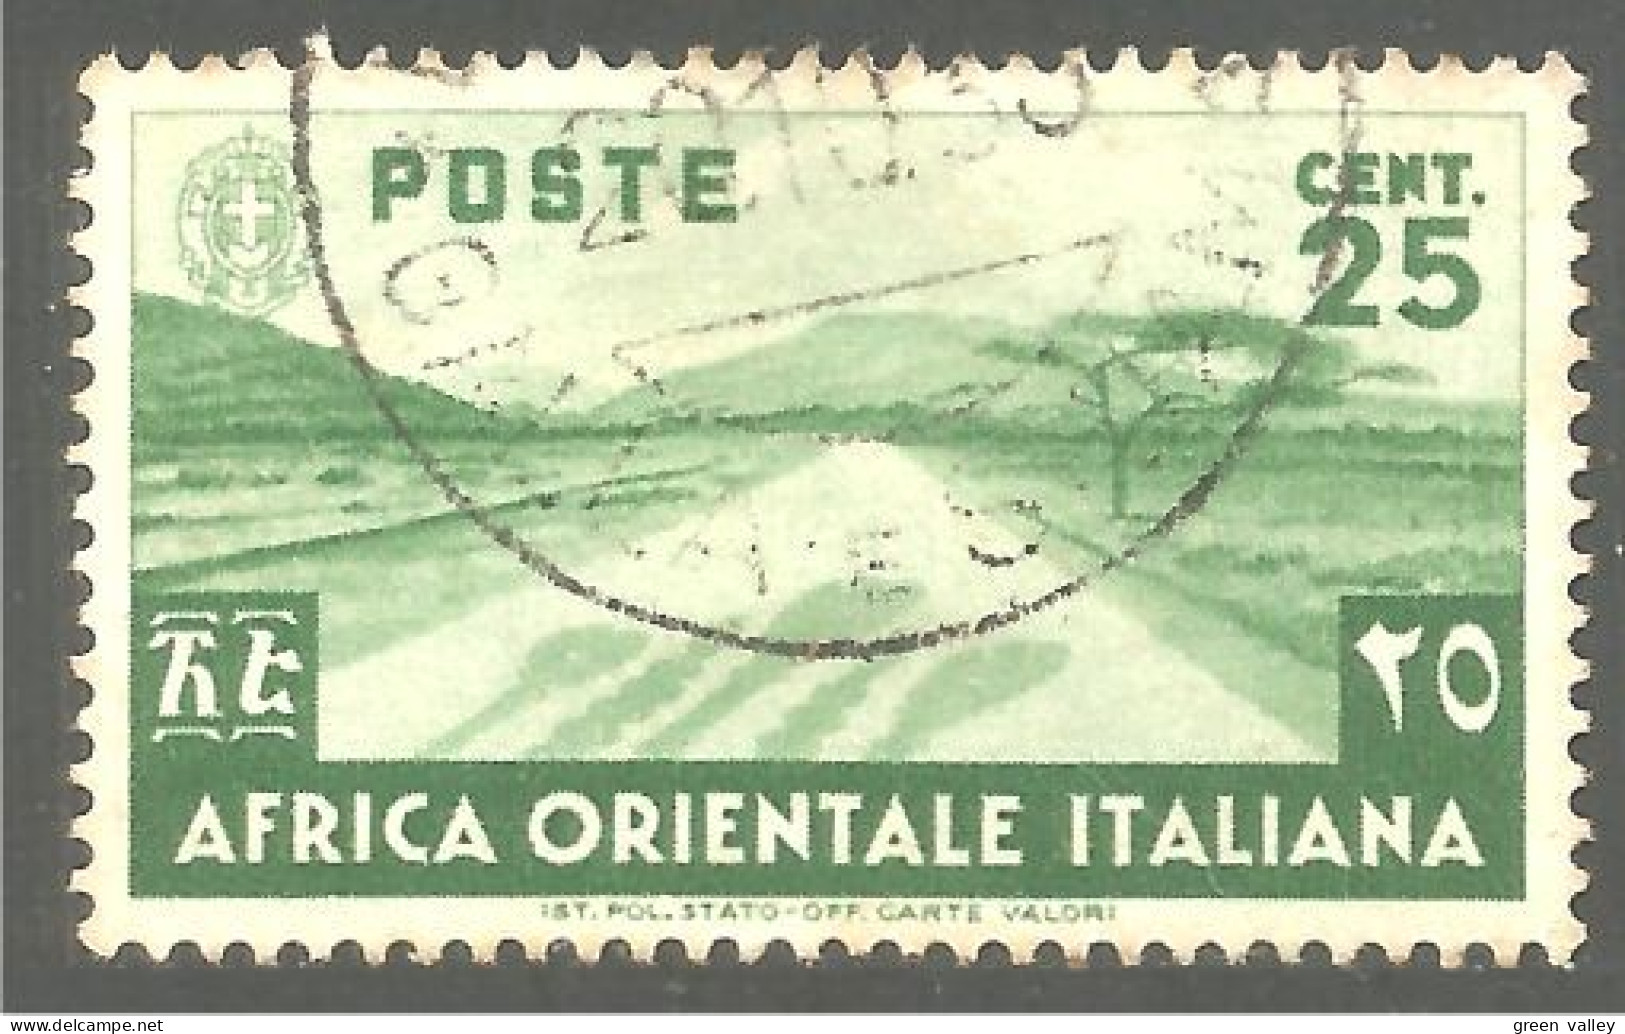 521 Africa Orientale Italiana 1938 Route Desert Road (ITC-148b) - Afrique Orientale Italienne